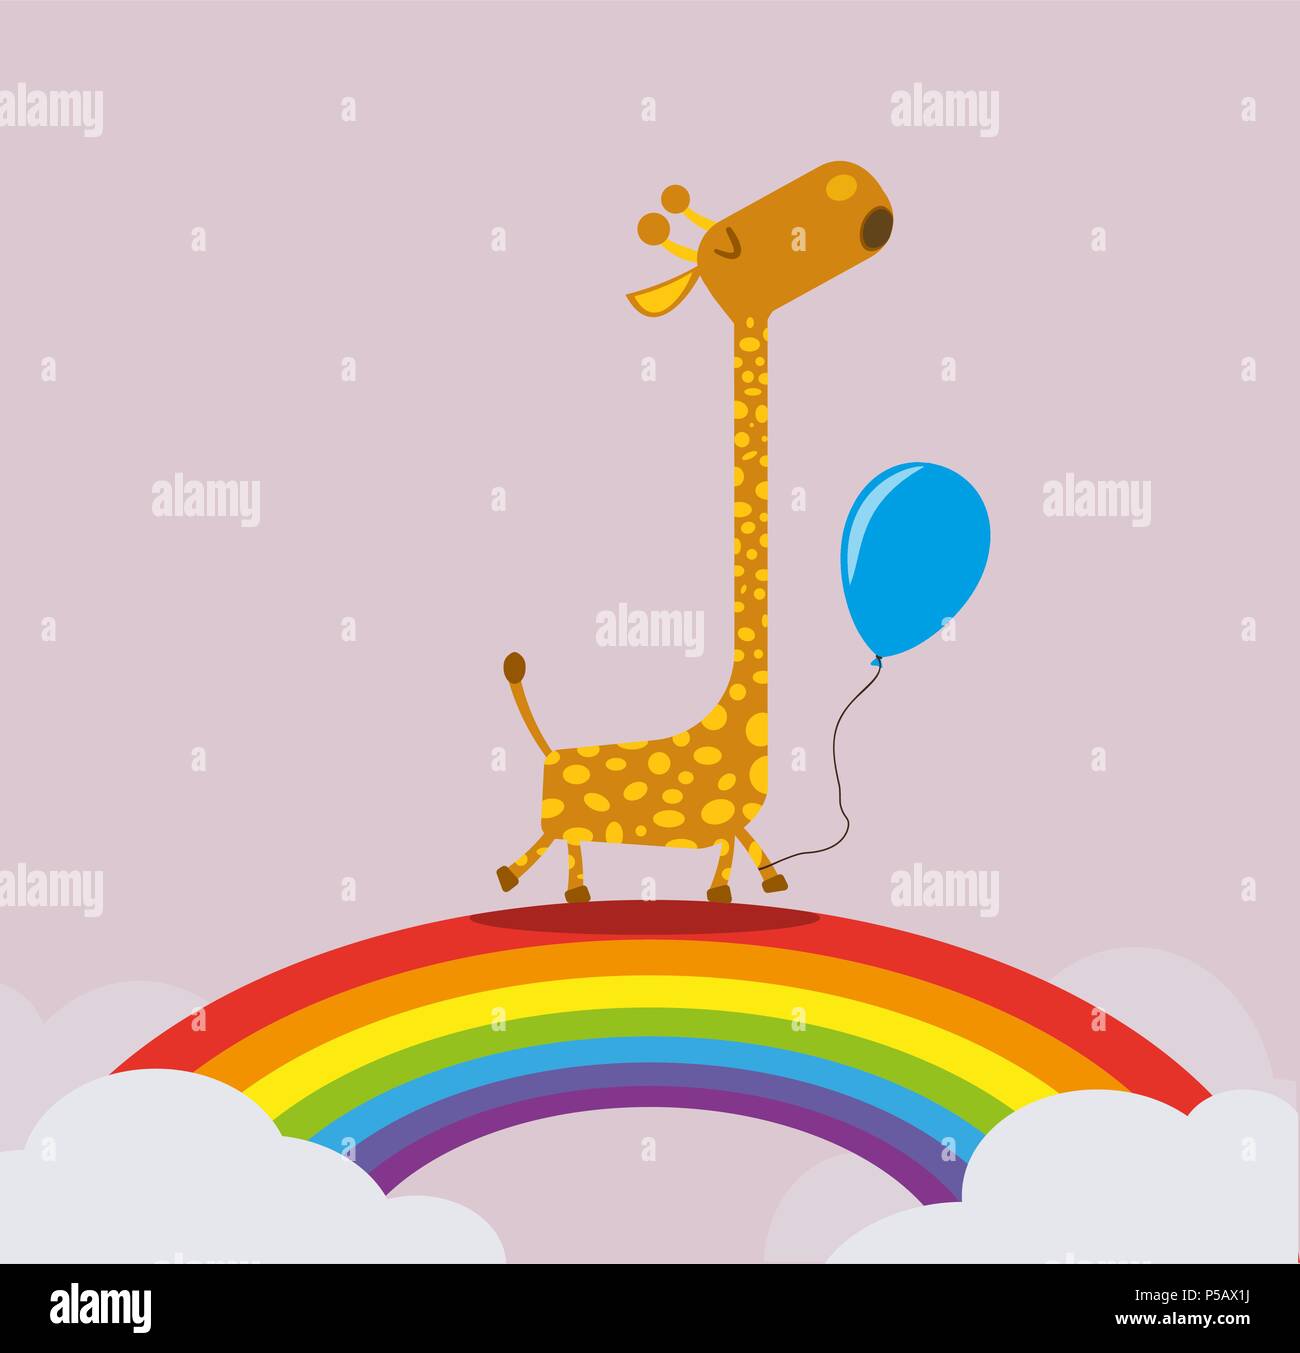 giraffe holding balloon walking on rainbow greeting card illuistration template Stock Vector